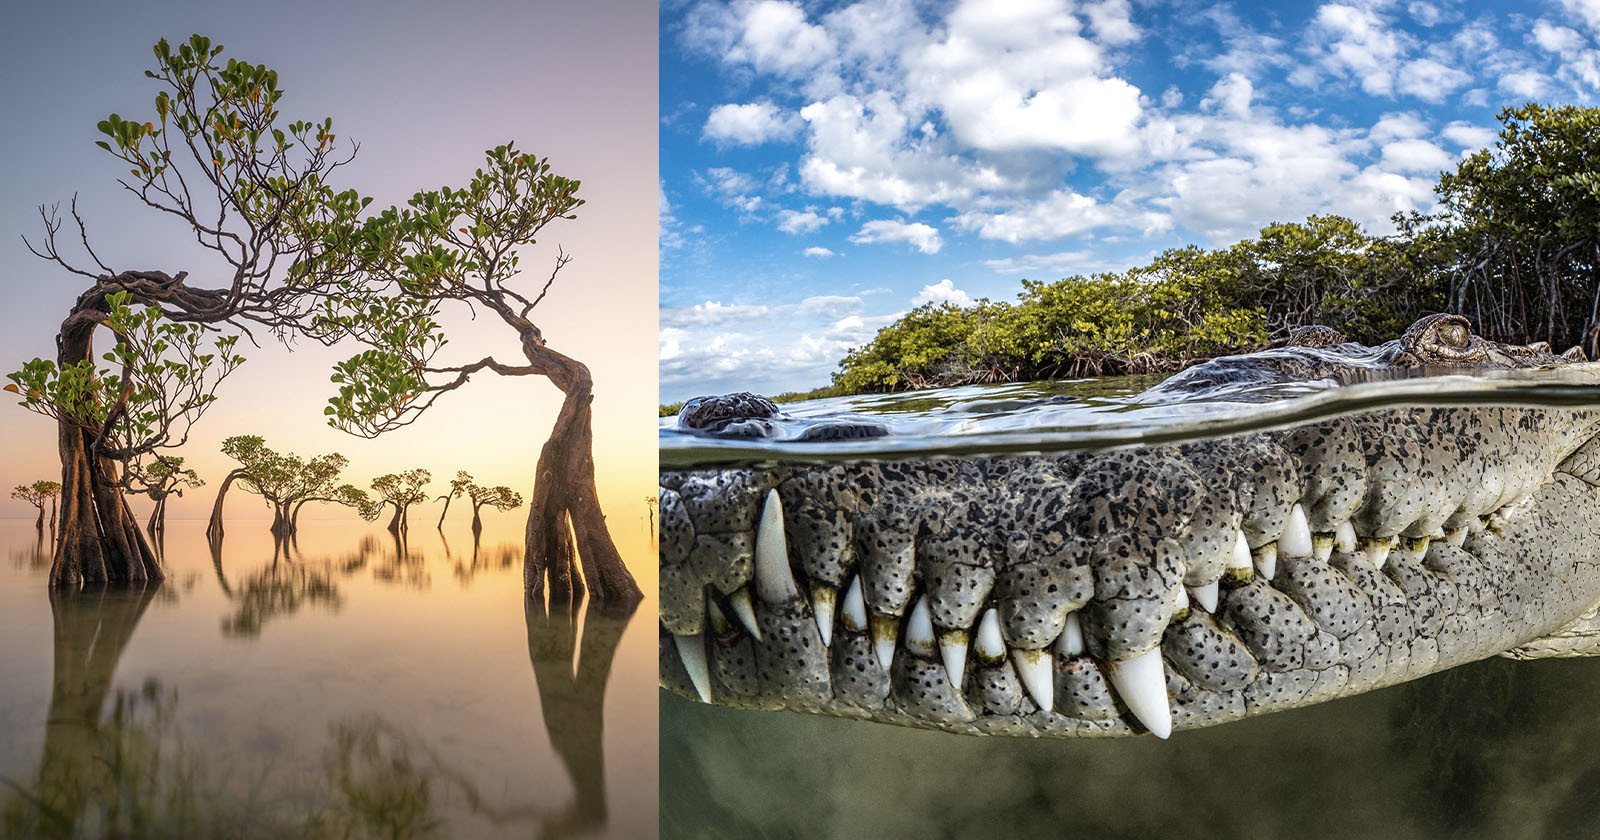 Close-Up Crocodile Photo Wins the 2022 Mangrove Photography Awards